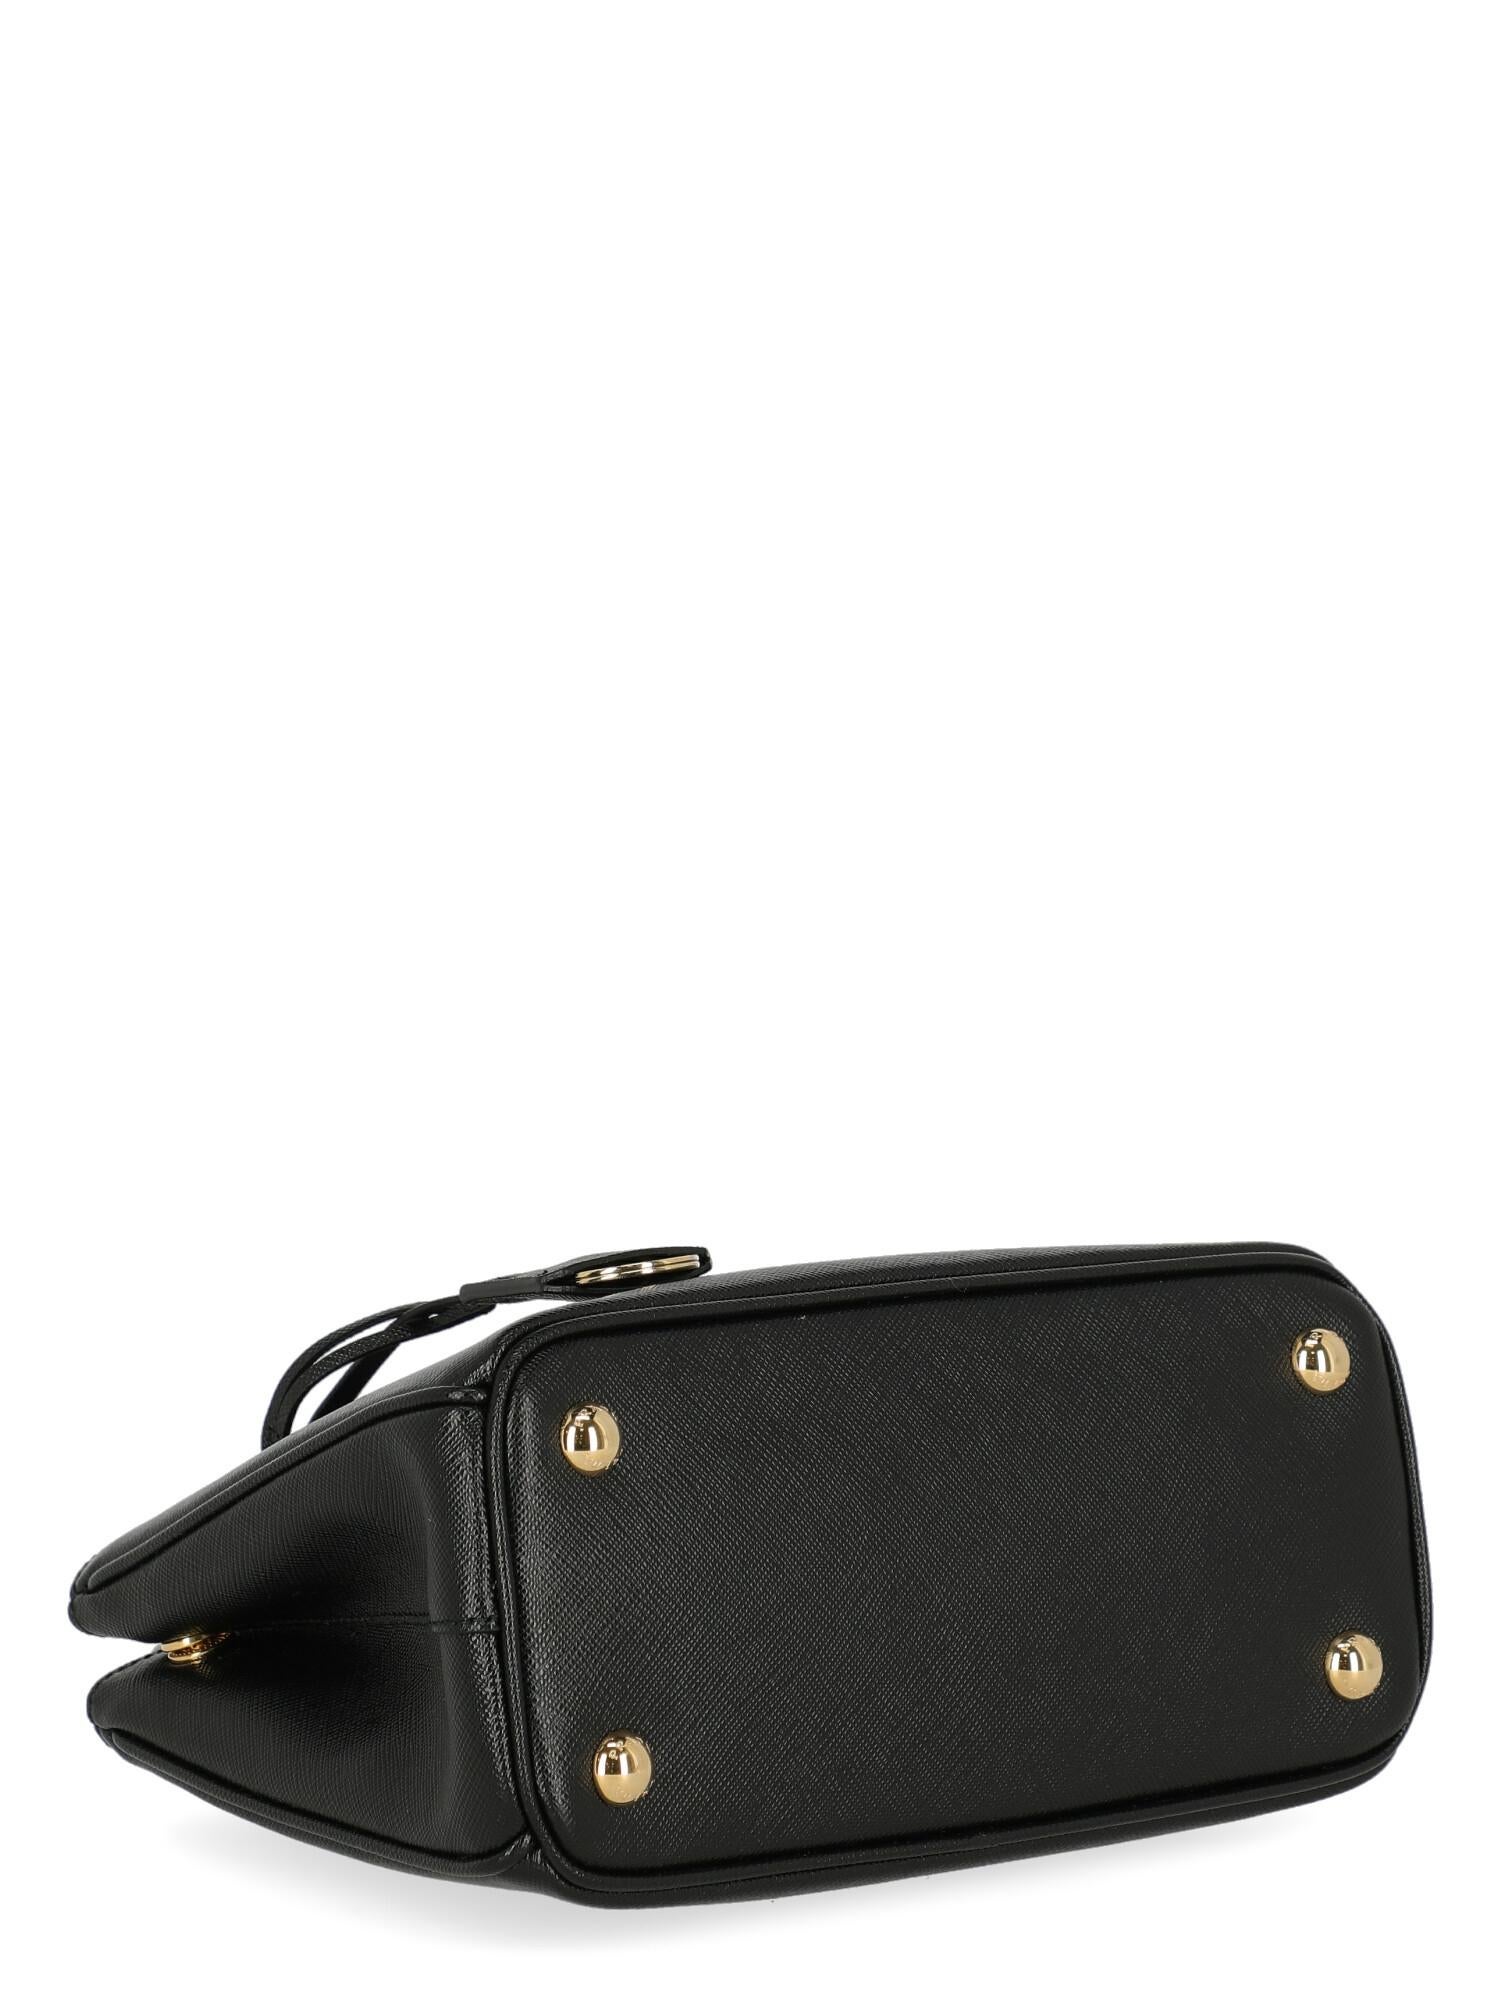 Prada  Women   Handbags  Black Leather  For Sale 1